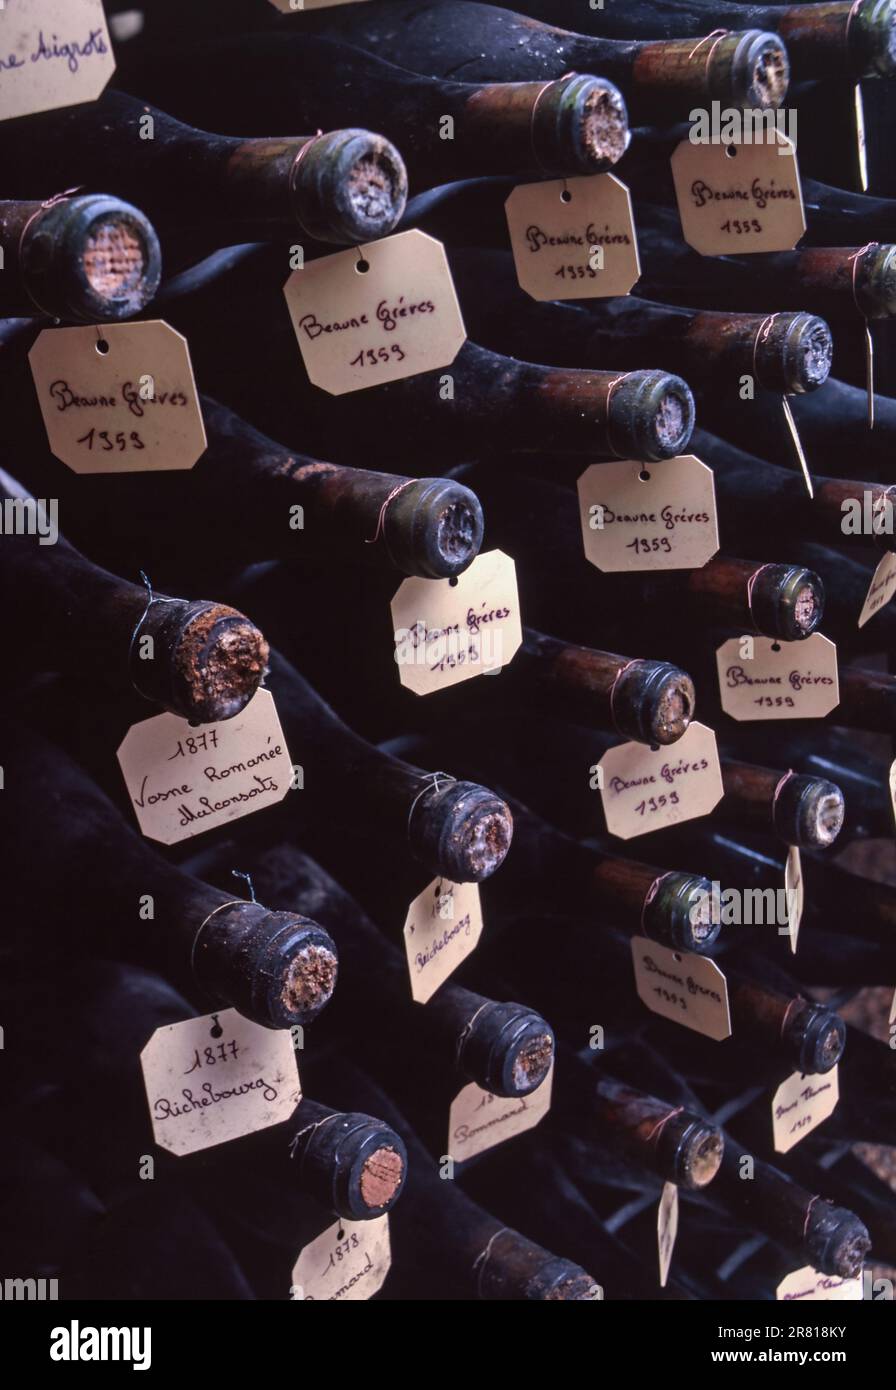 Burgundy fine wines labeled in cellar, inc.1959-Beaune Gréves, 1877-Vosne Romanée / Richebourg, in wine cellars of Louis Jadot Beaune Côte d'Or France Stock Photo